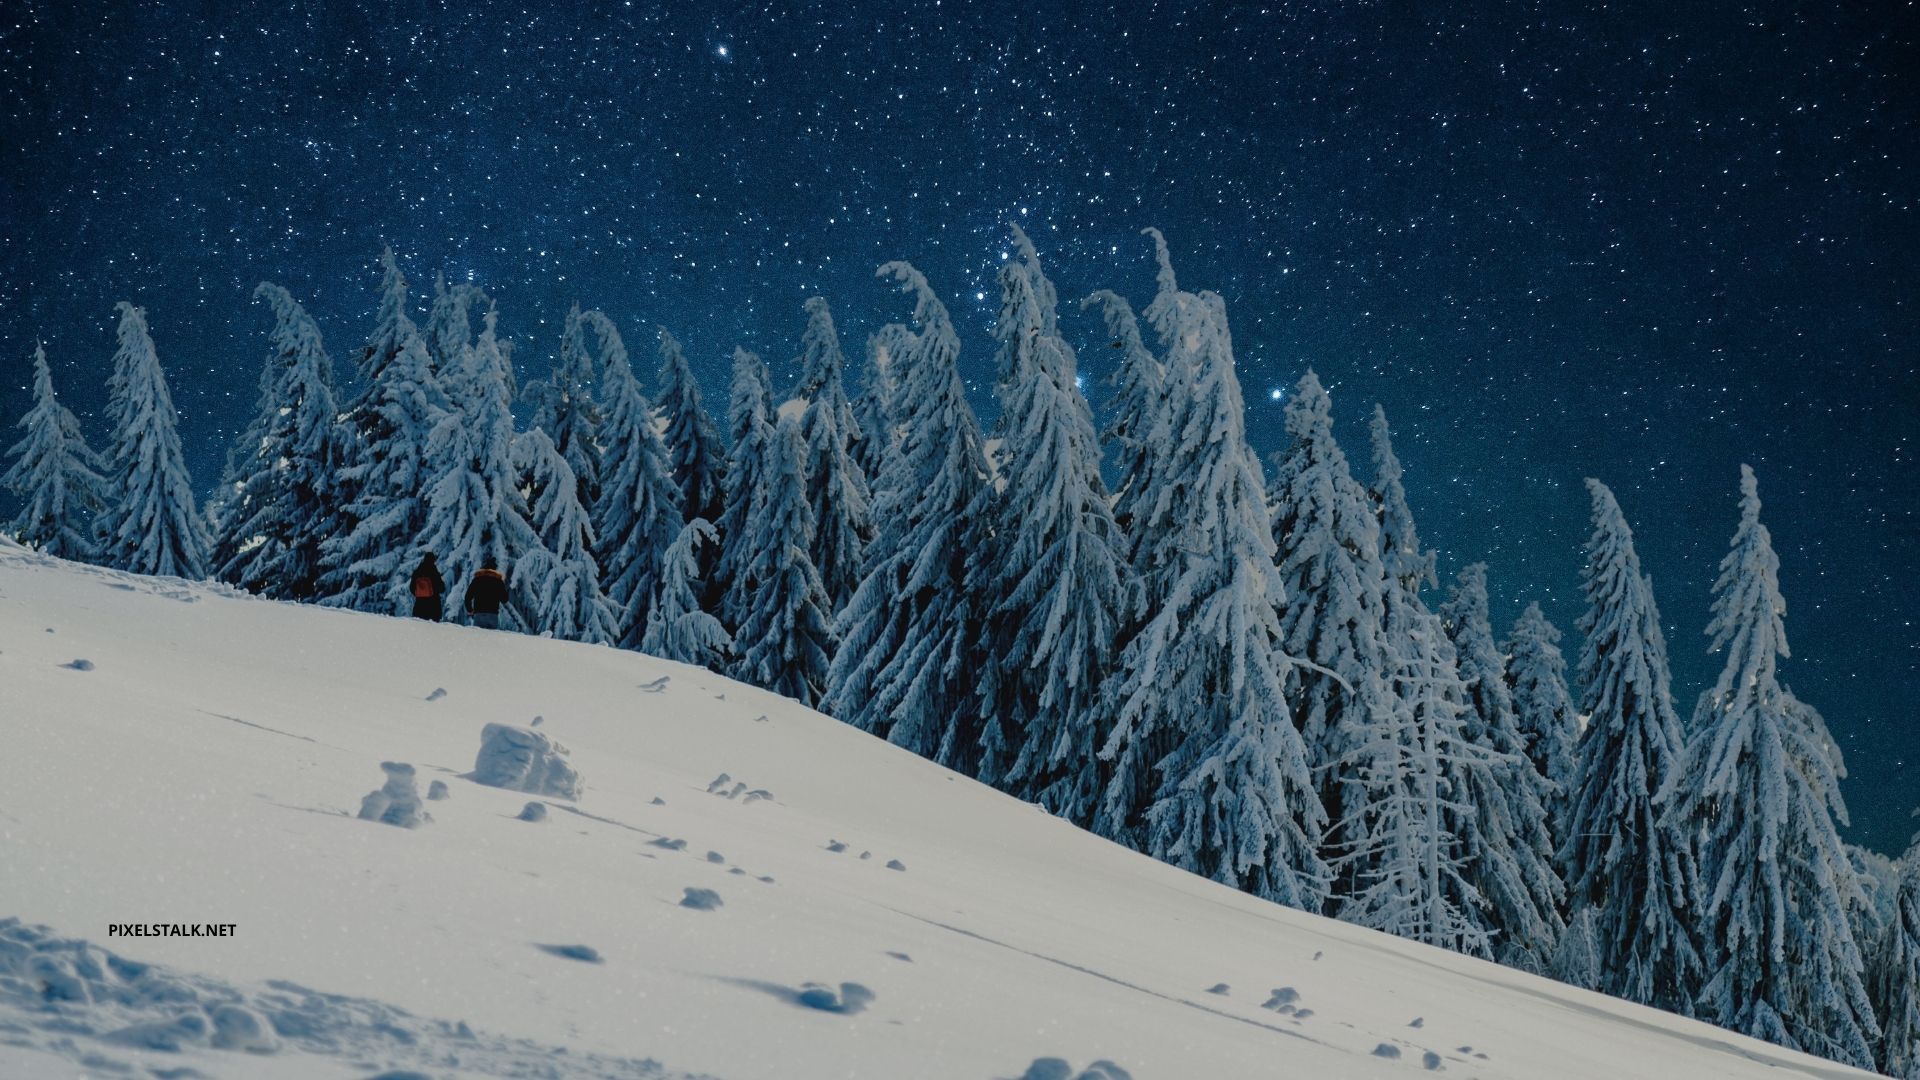 Winter wonderland wallpapers for desktop